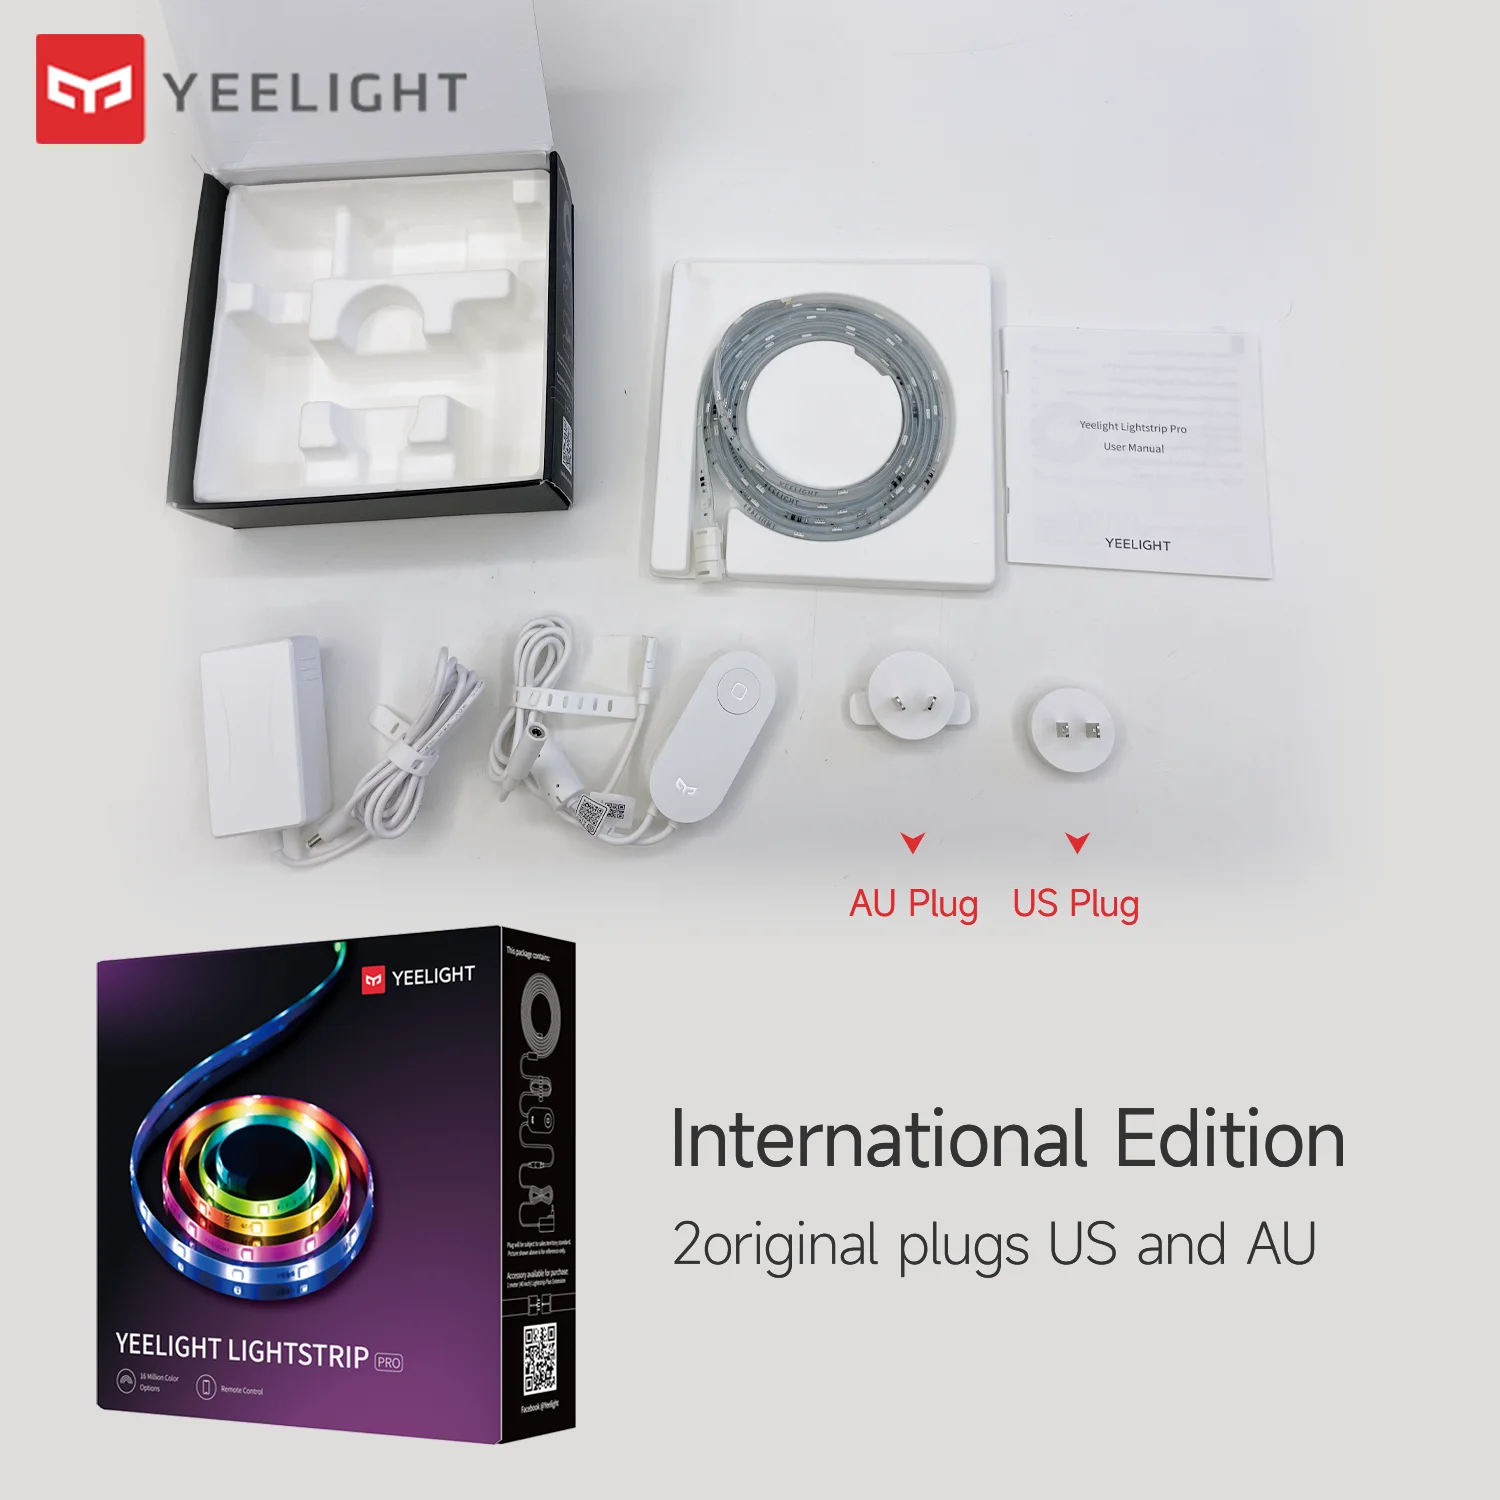 Yeelight LED Lightstrip Pro Chameleon smartcolor ambilight RGB YLDD005  Light Strip Work With Apple Homekit & Mihome app - AliExpress